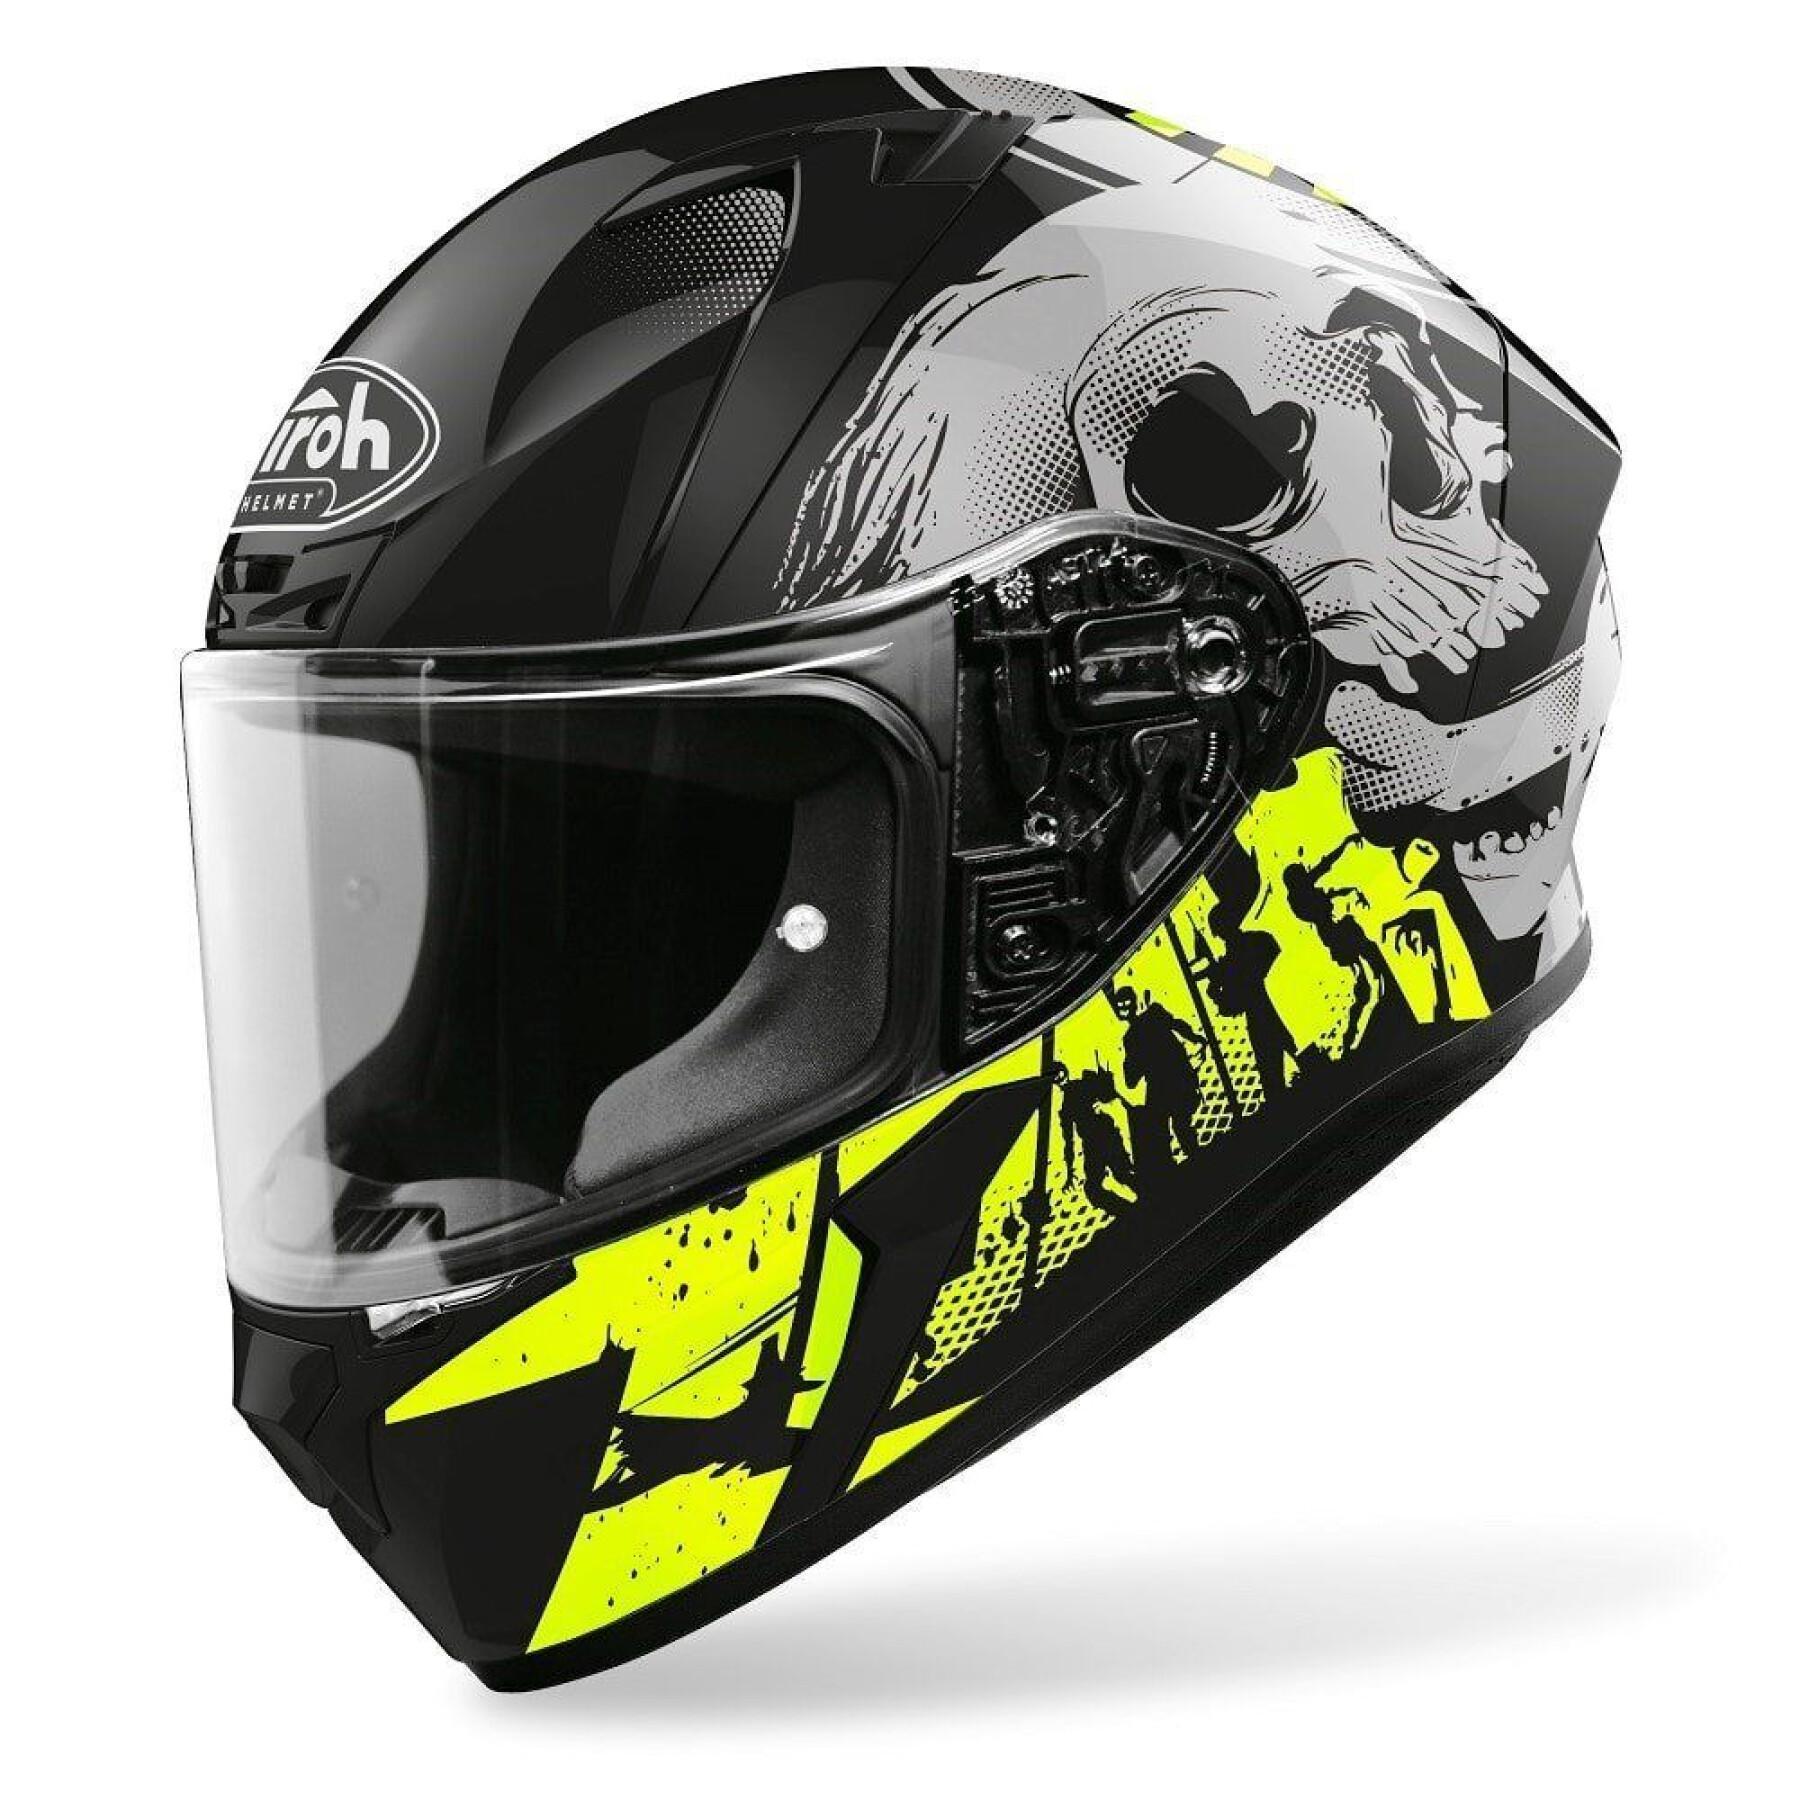 Full face motorcycle helmet Airoh Valor Akuna